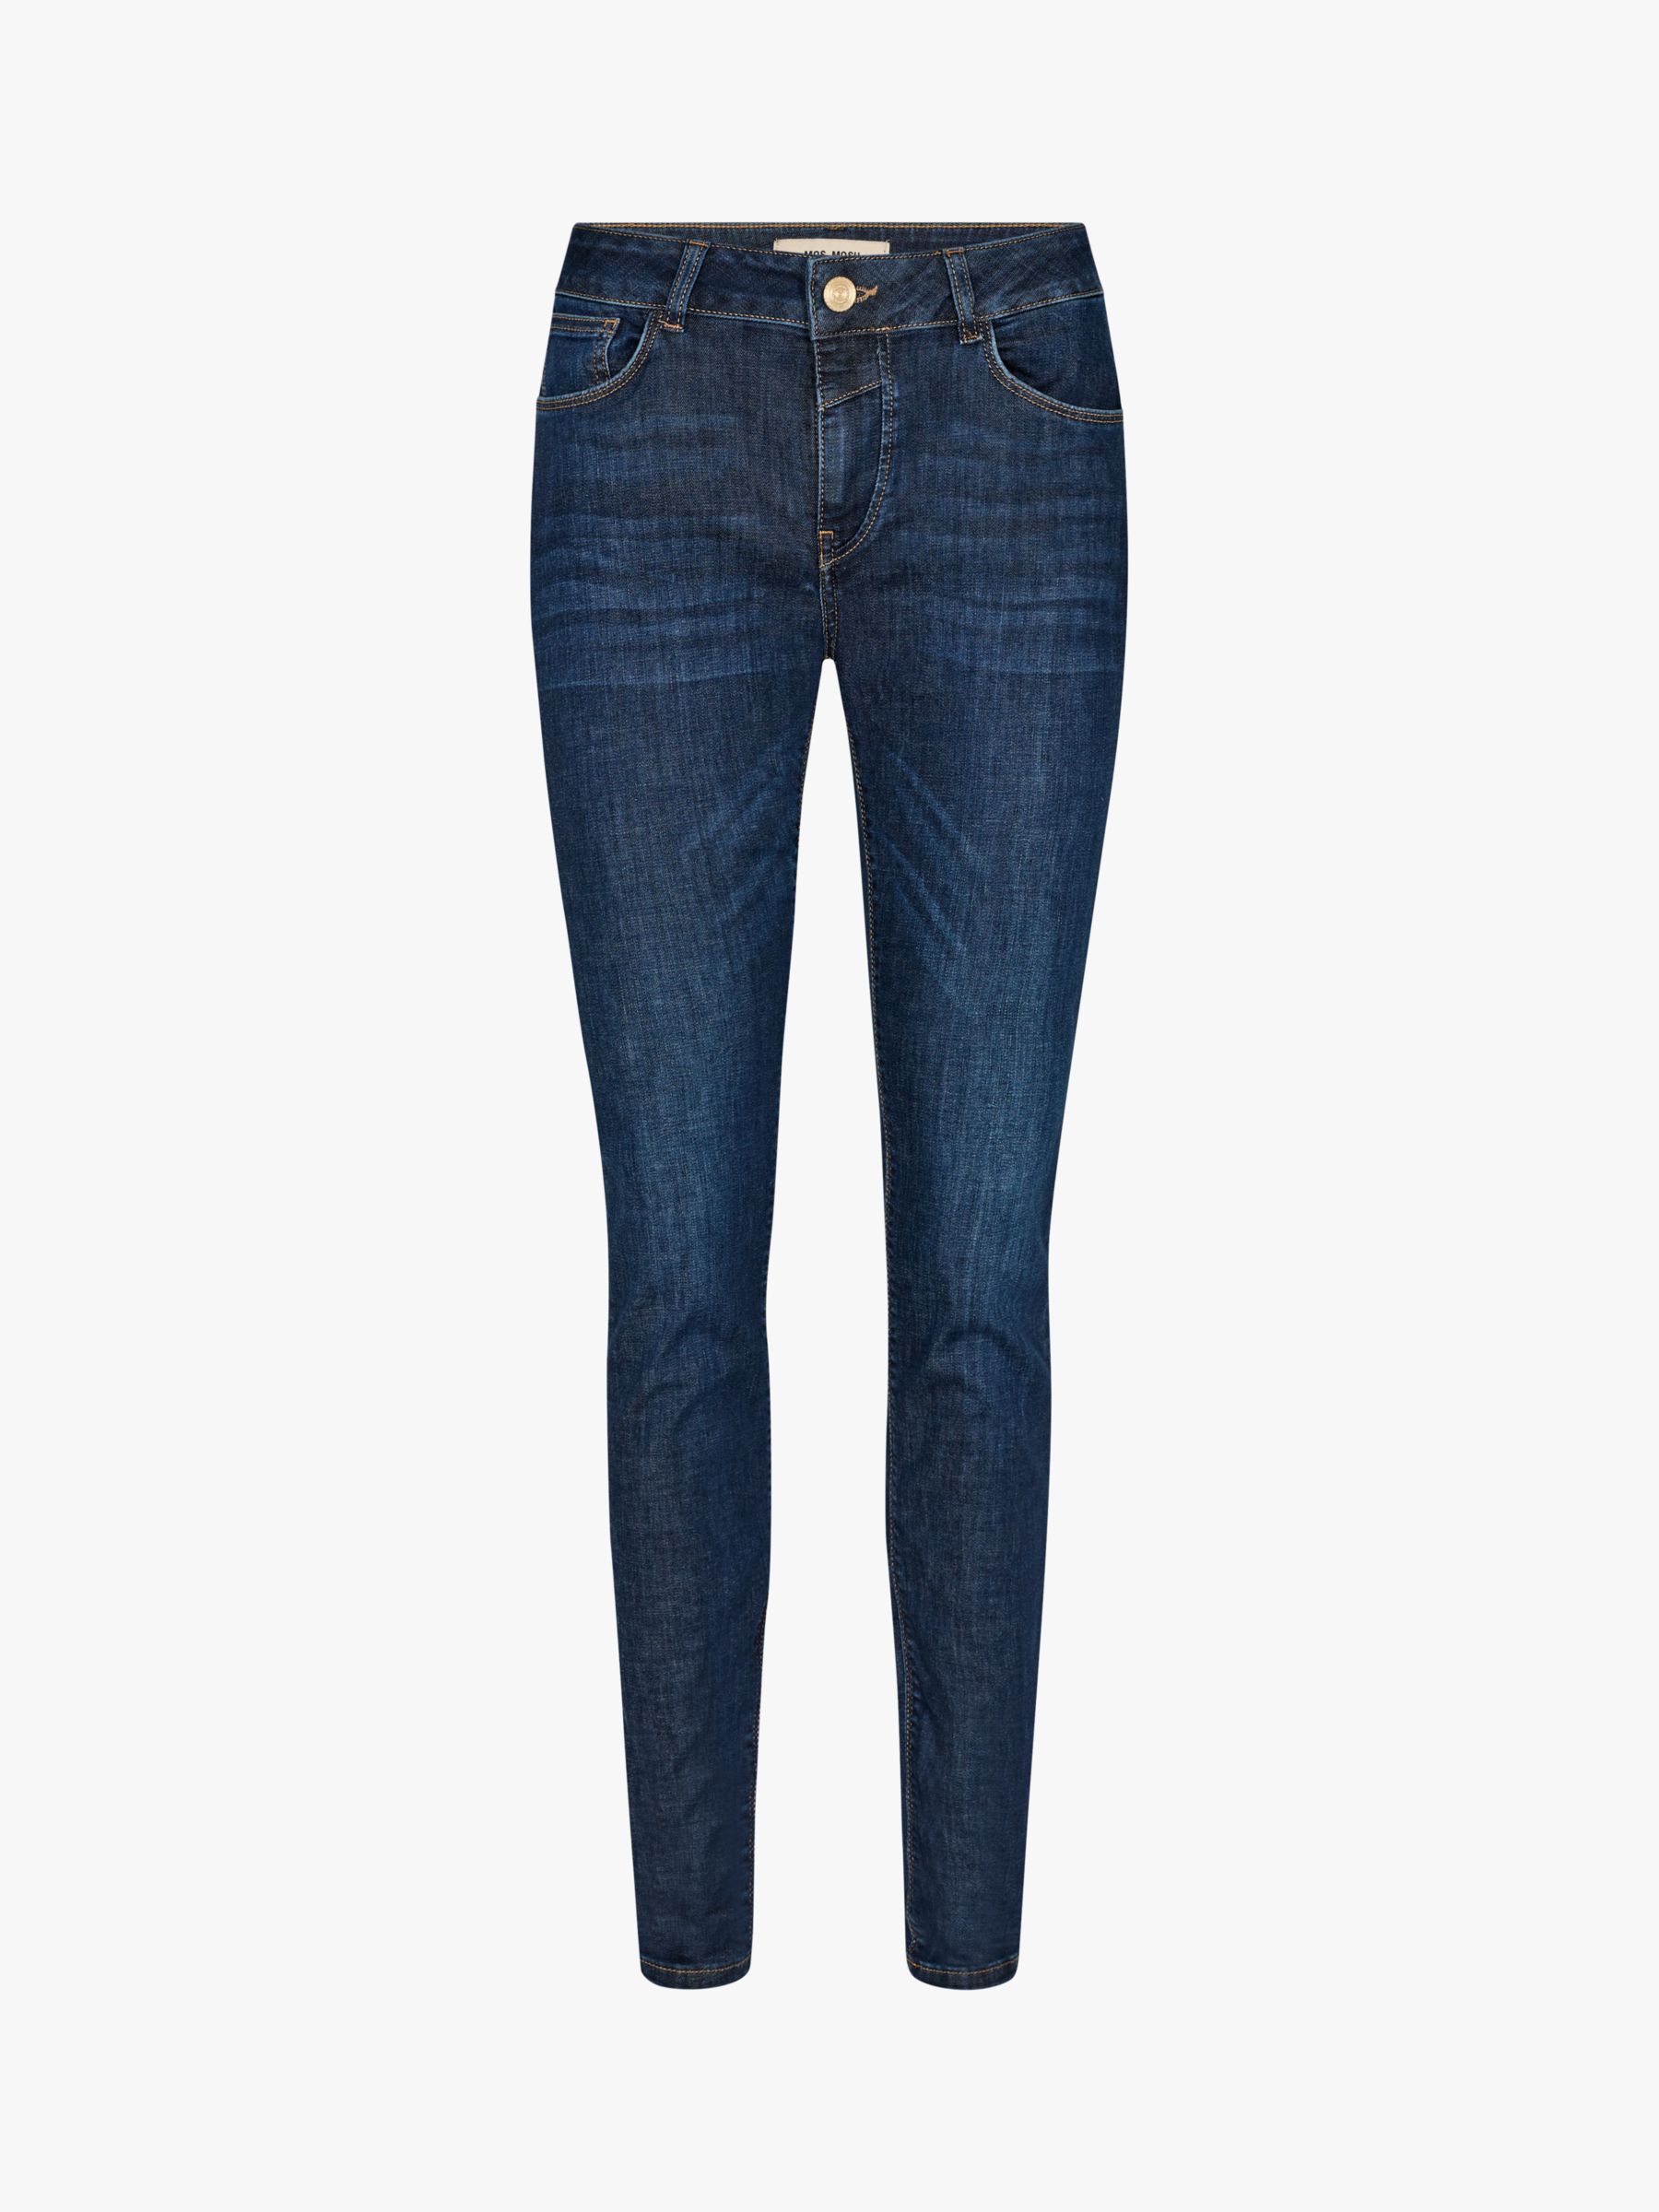 MOS MOSH Naomi Tailored Fit Jeans, Blue Denim, 25R